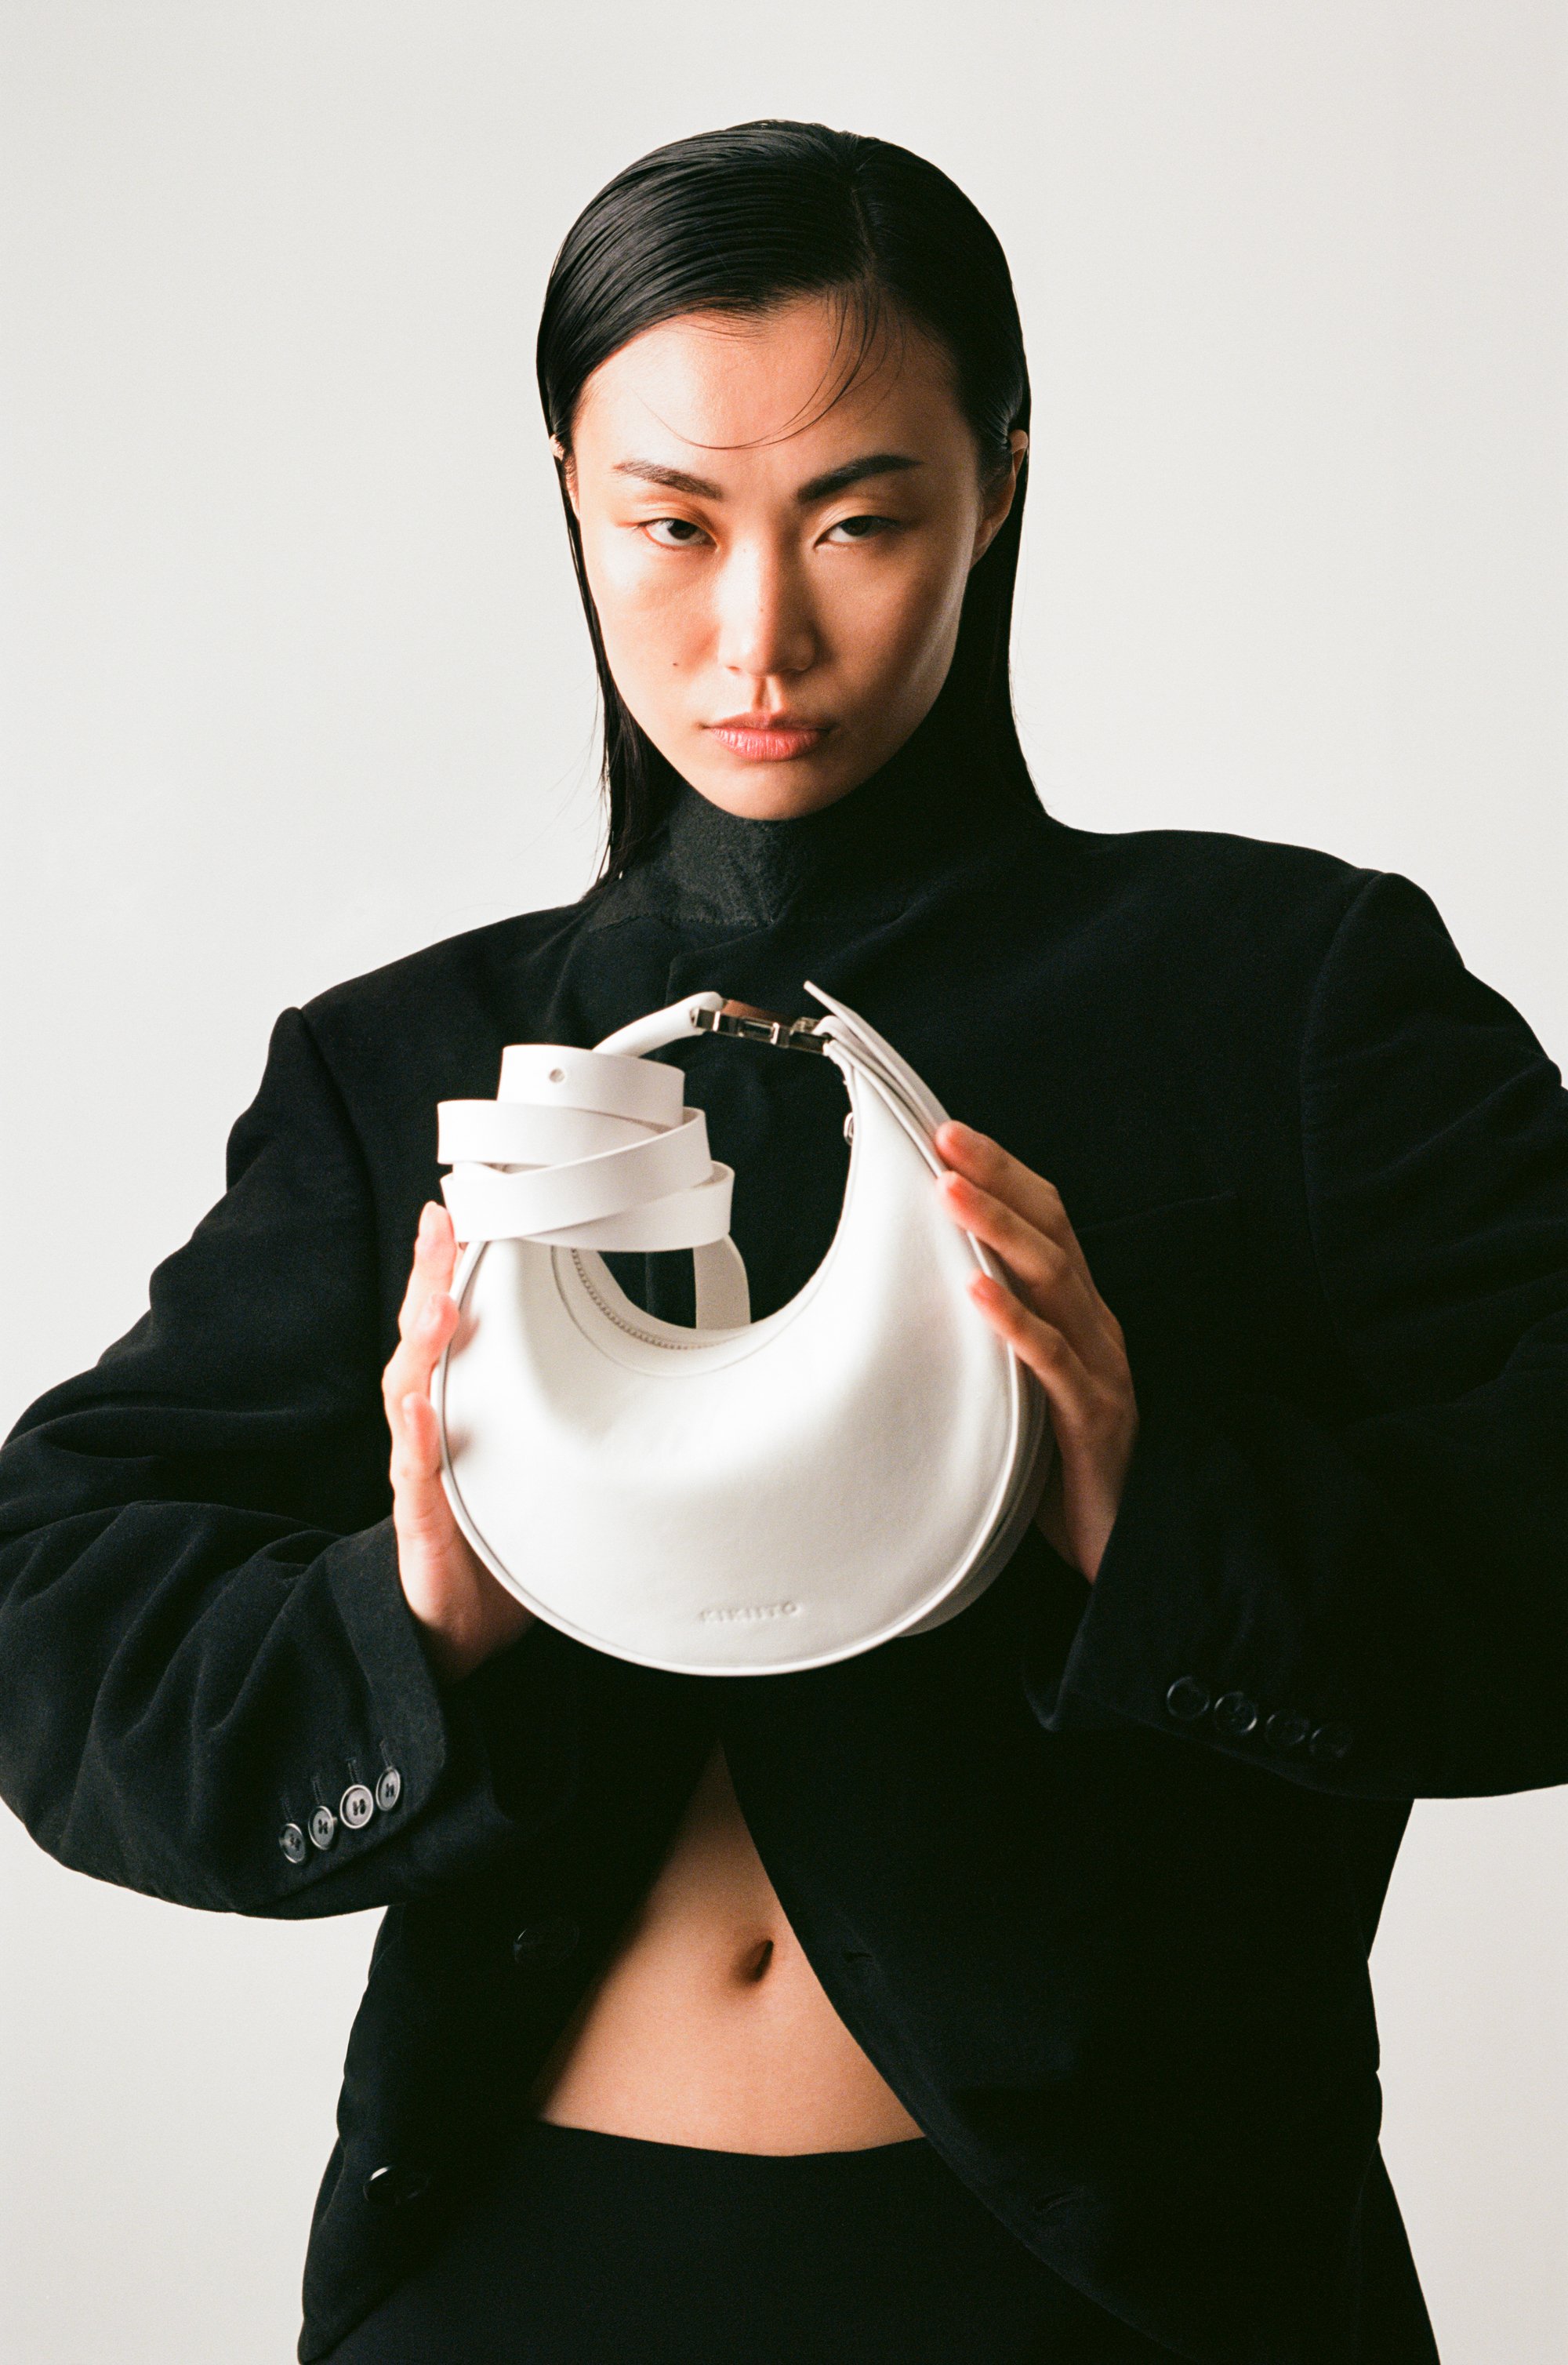 Kikiito-houseofito-tuki-moon-white-circle-leather-handbag-bag-made-in-England-Uk-styling-craftsmanship-handmade-avantgarde-Japanese-London-accessories-minimalist-design-sustainable-slow-fashion-brand-one-of-a-kind-editorial-photoshoot-model-Po-Hsuan.jpg